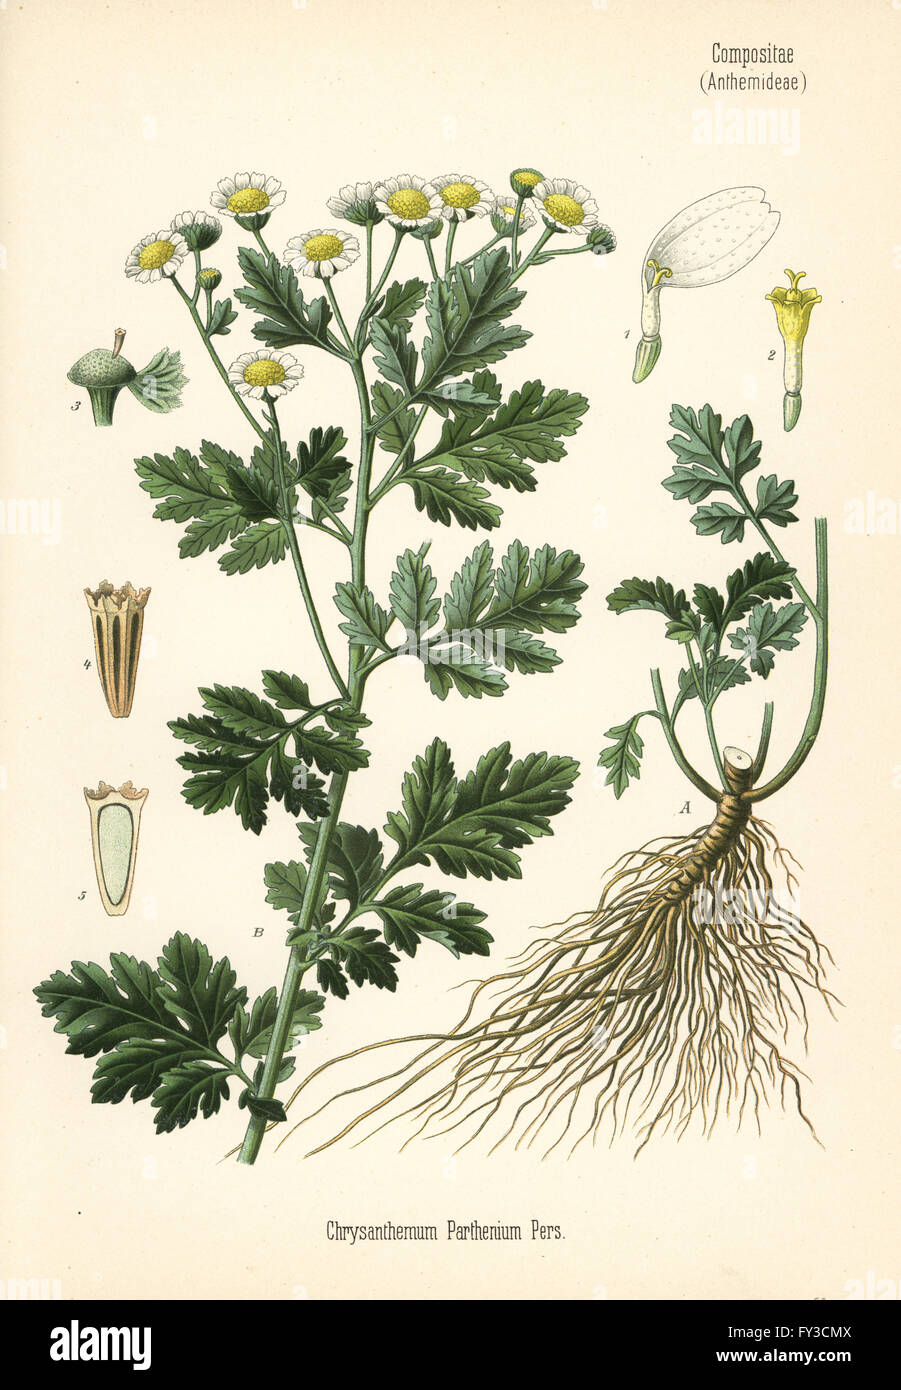 Feverfew, Tanacetum parthenium (Chrysanthemum parthenium). Chromolithograph after a botanical illustration from Hermann Adolph Koehler's Medicinal Plants, edited by Gustav Pabst, Koehler, Germany, 1887. Stock Photo